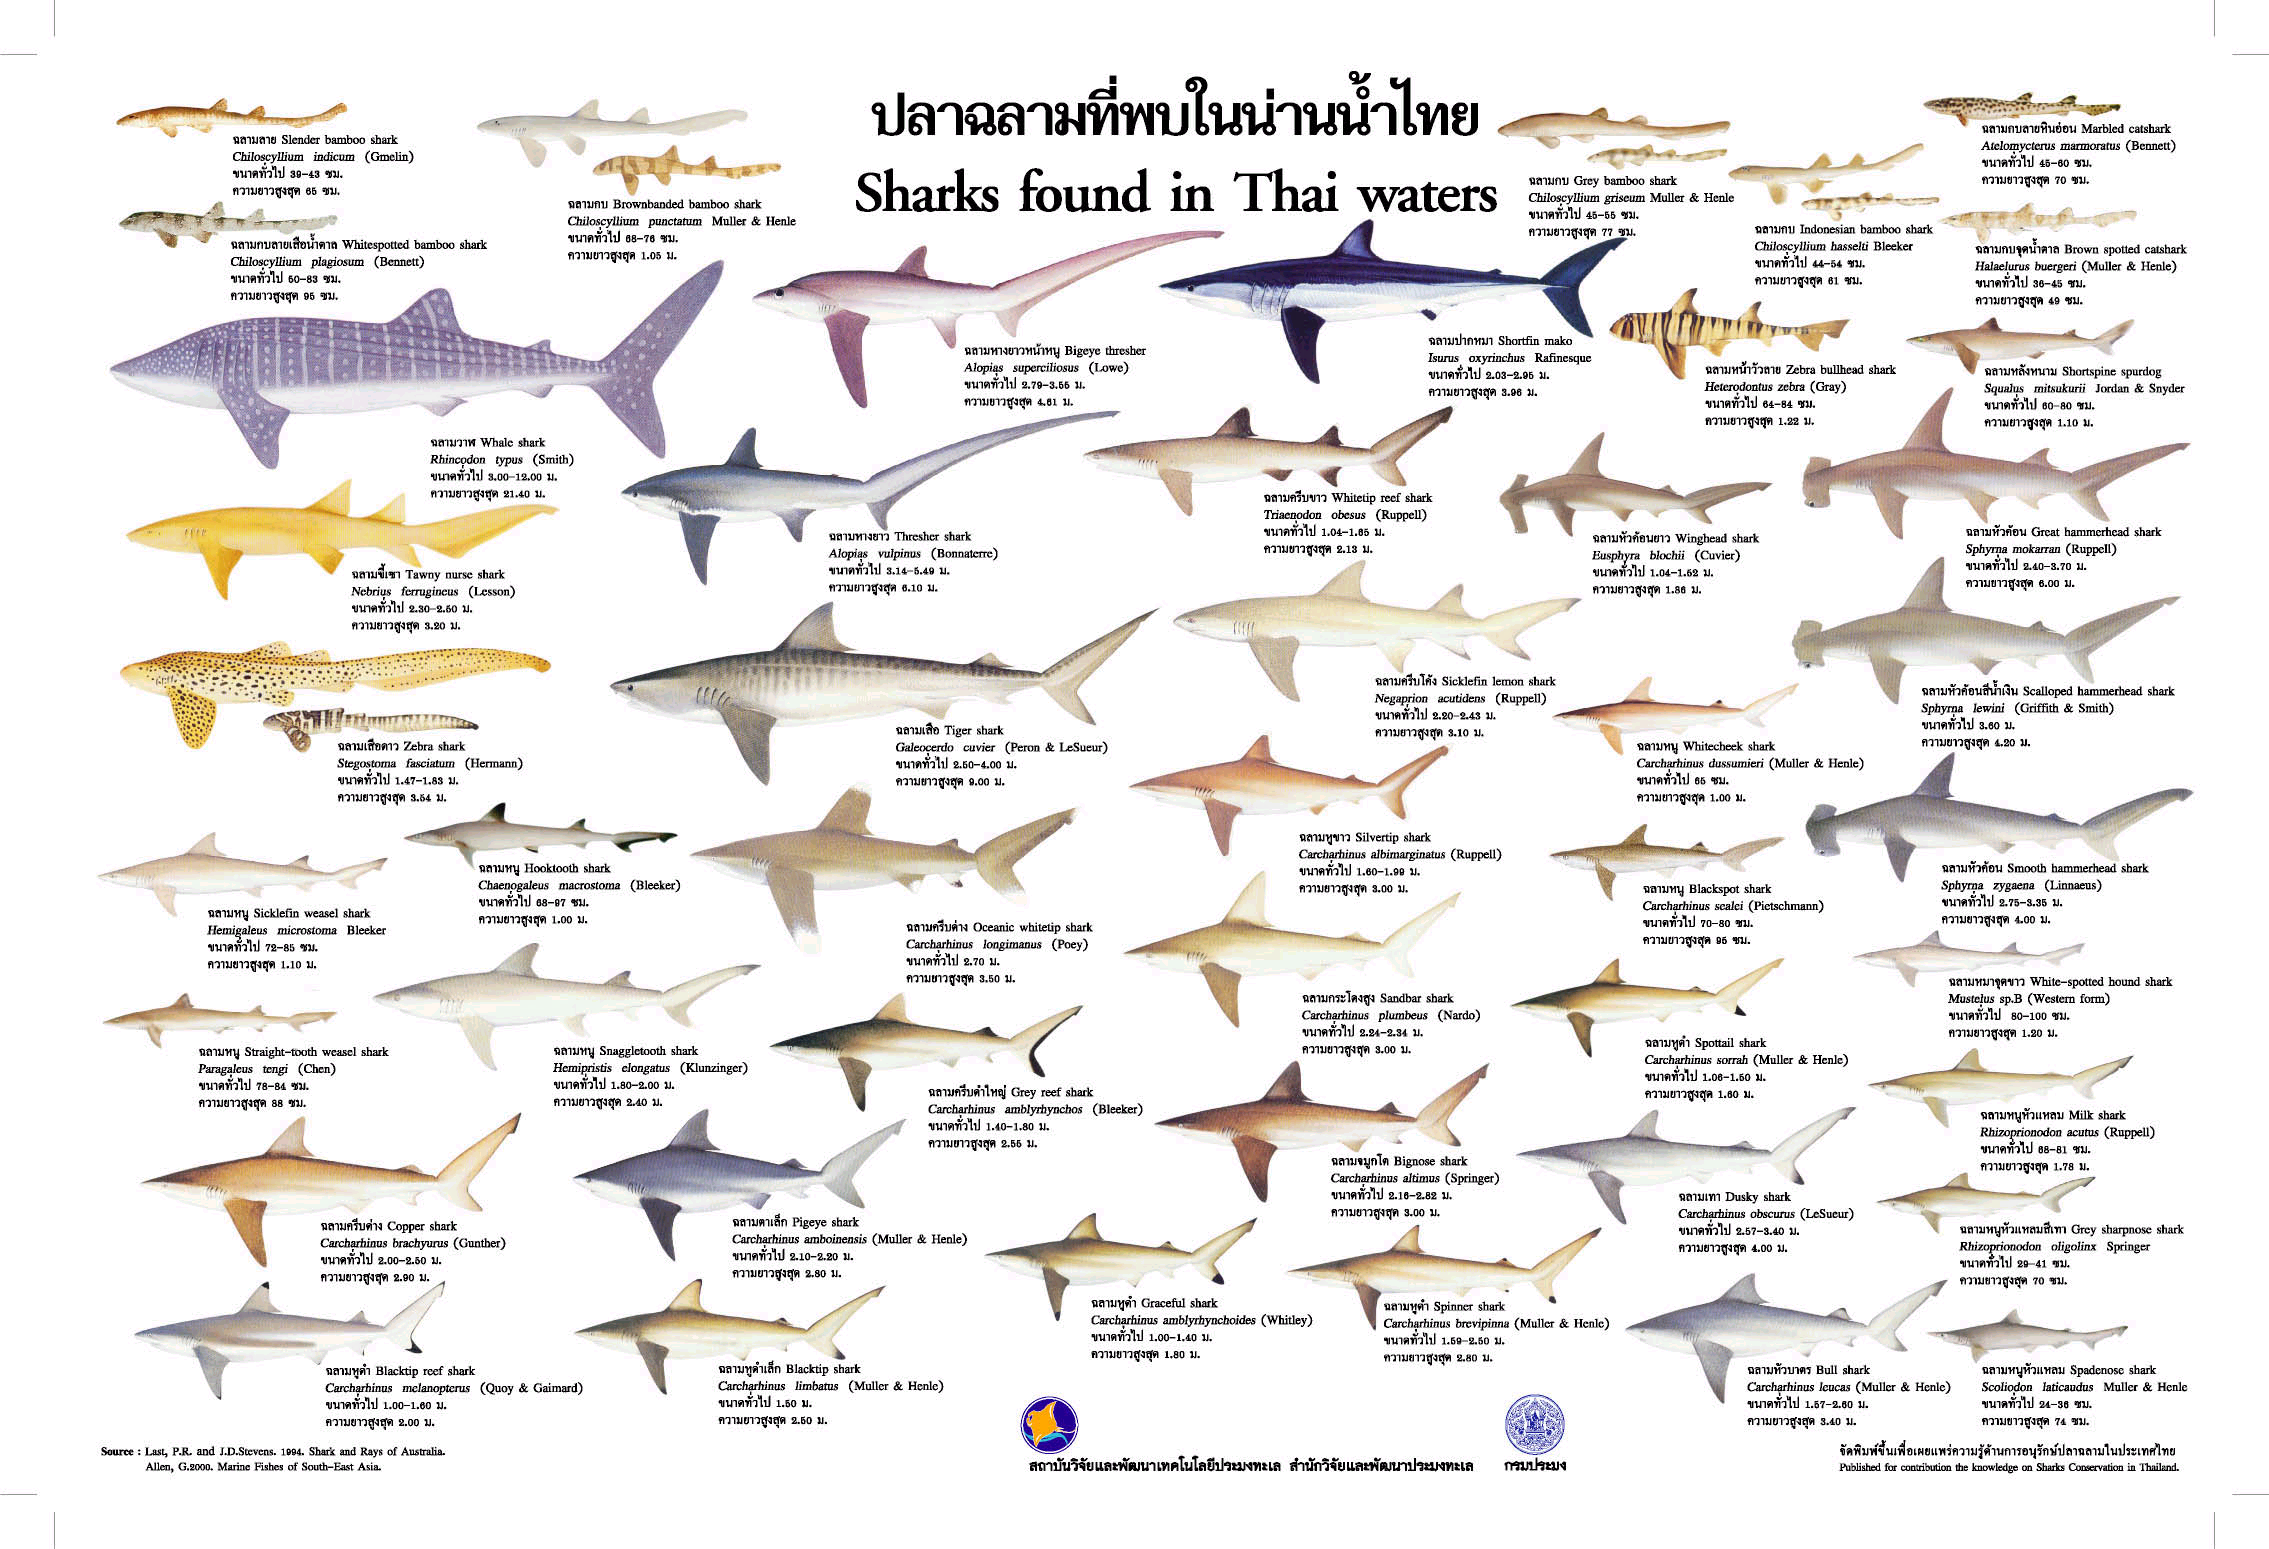 Species Identification Chart